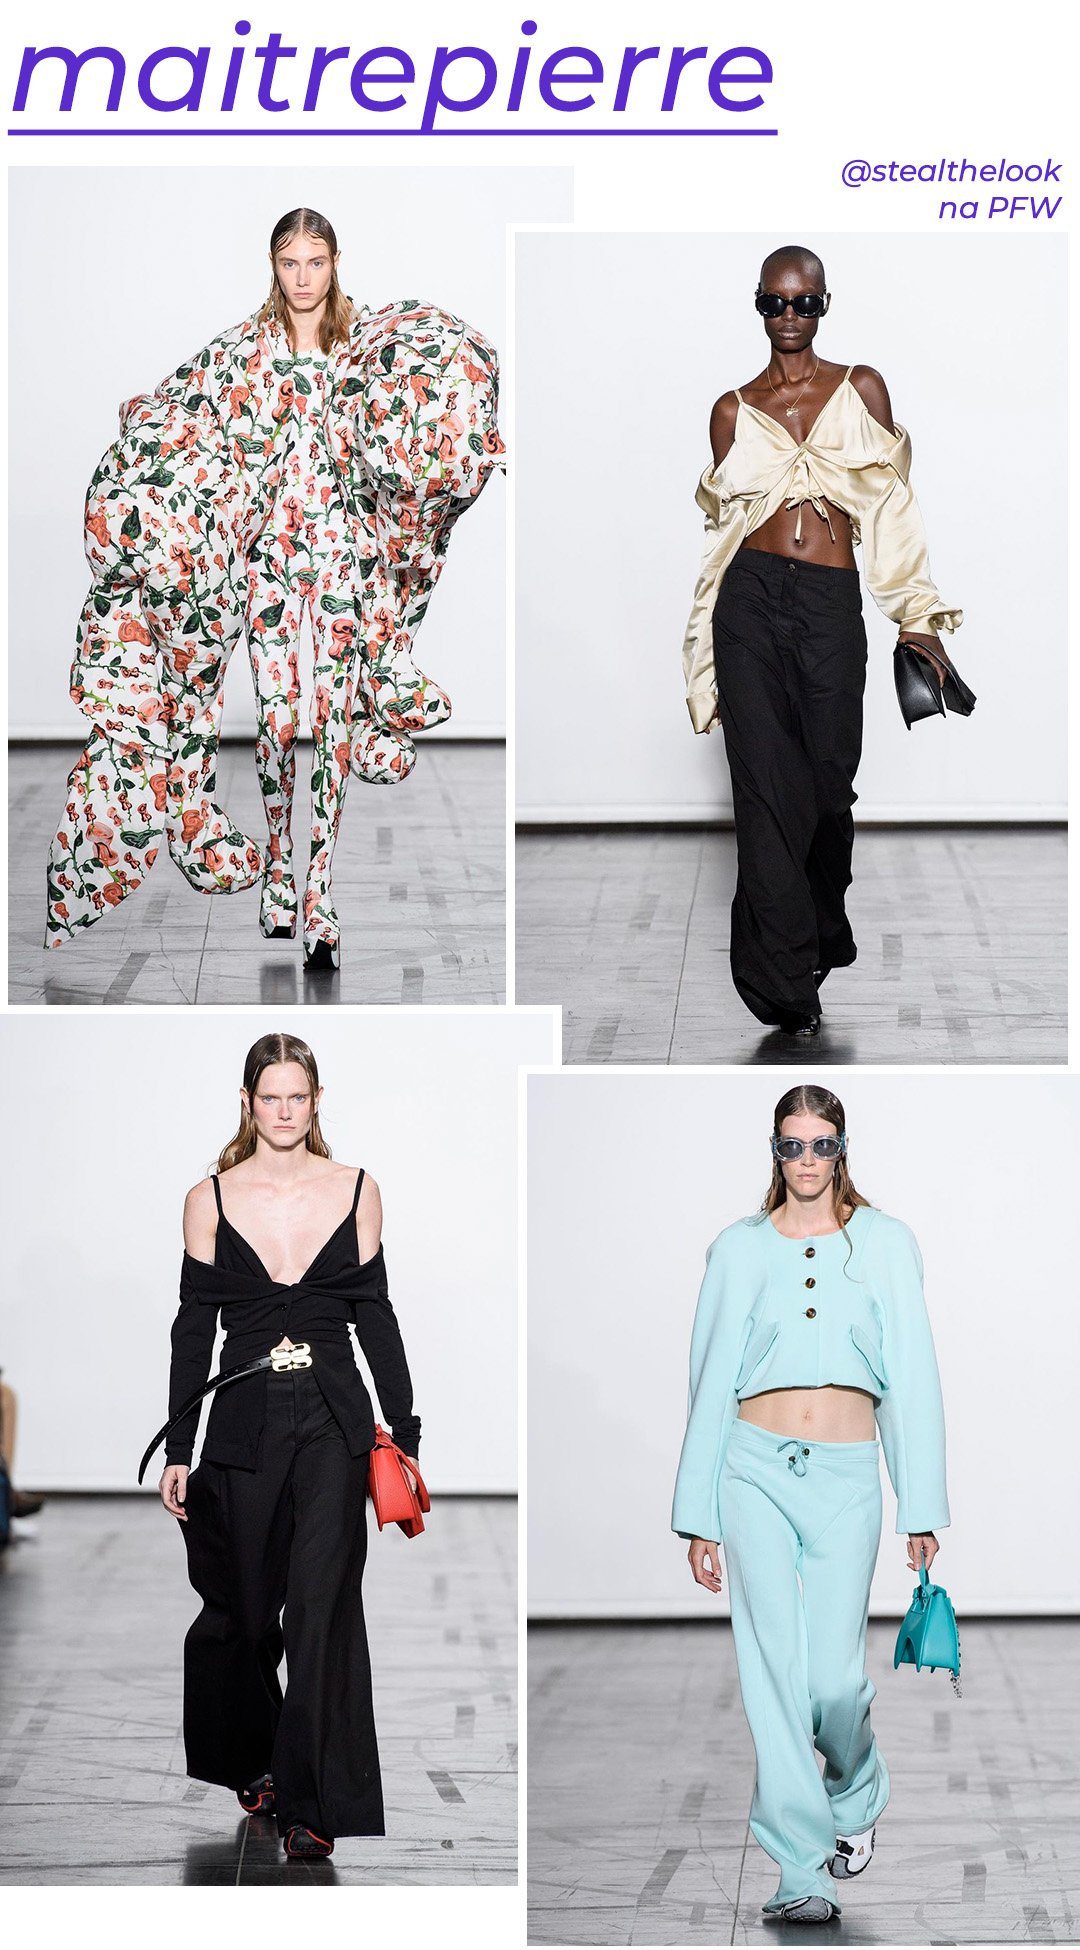 MAITREPIERRE S/S 2023 - roupas diversas - Paris Fashion Week - Primavera - modelo andando pela passarela - https://stealthelook.com.br